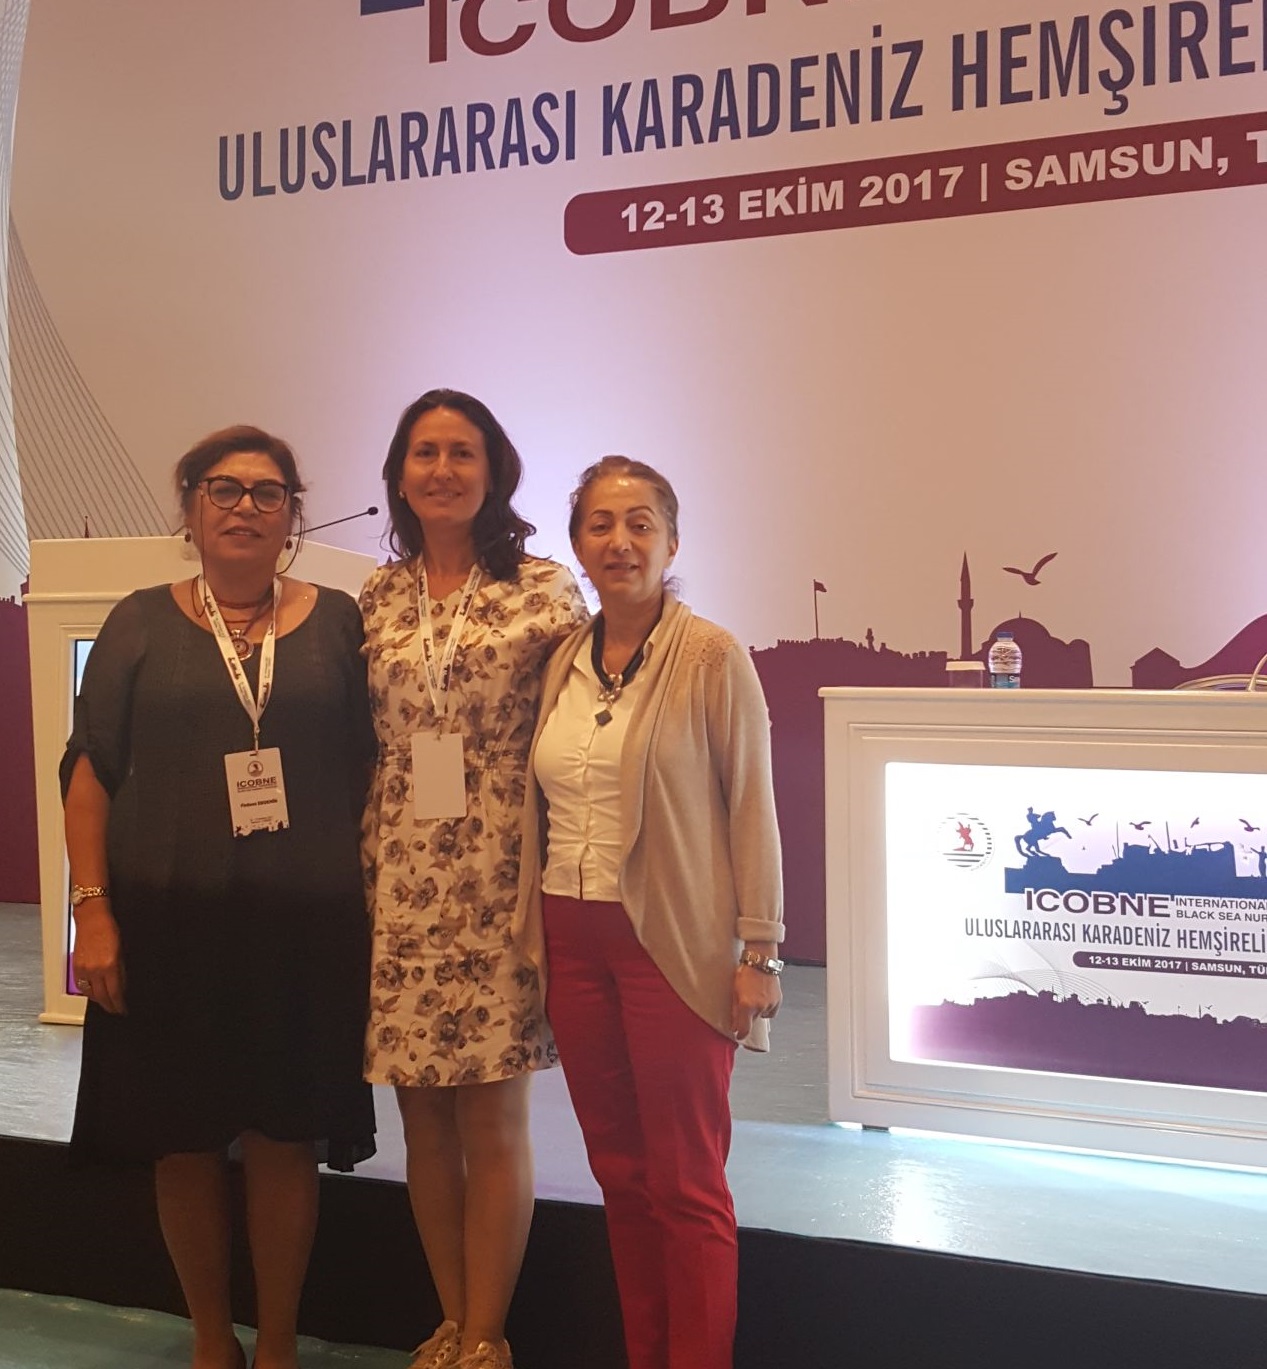 Near East University Faculty of Health Sciences attended an International Congress on Nursing Education in Karadeniz